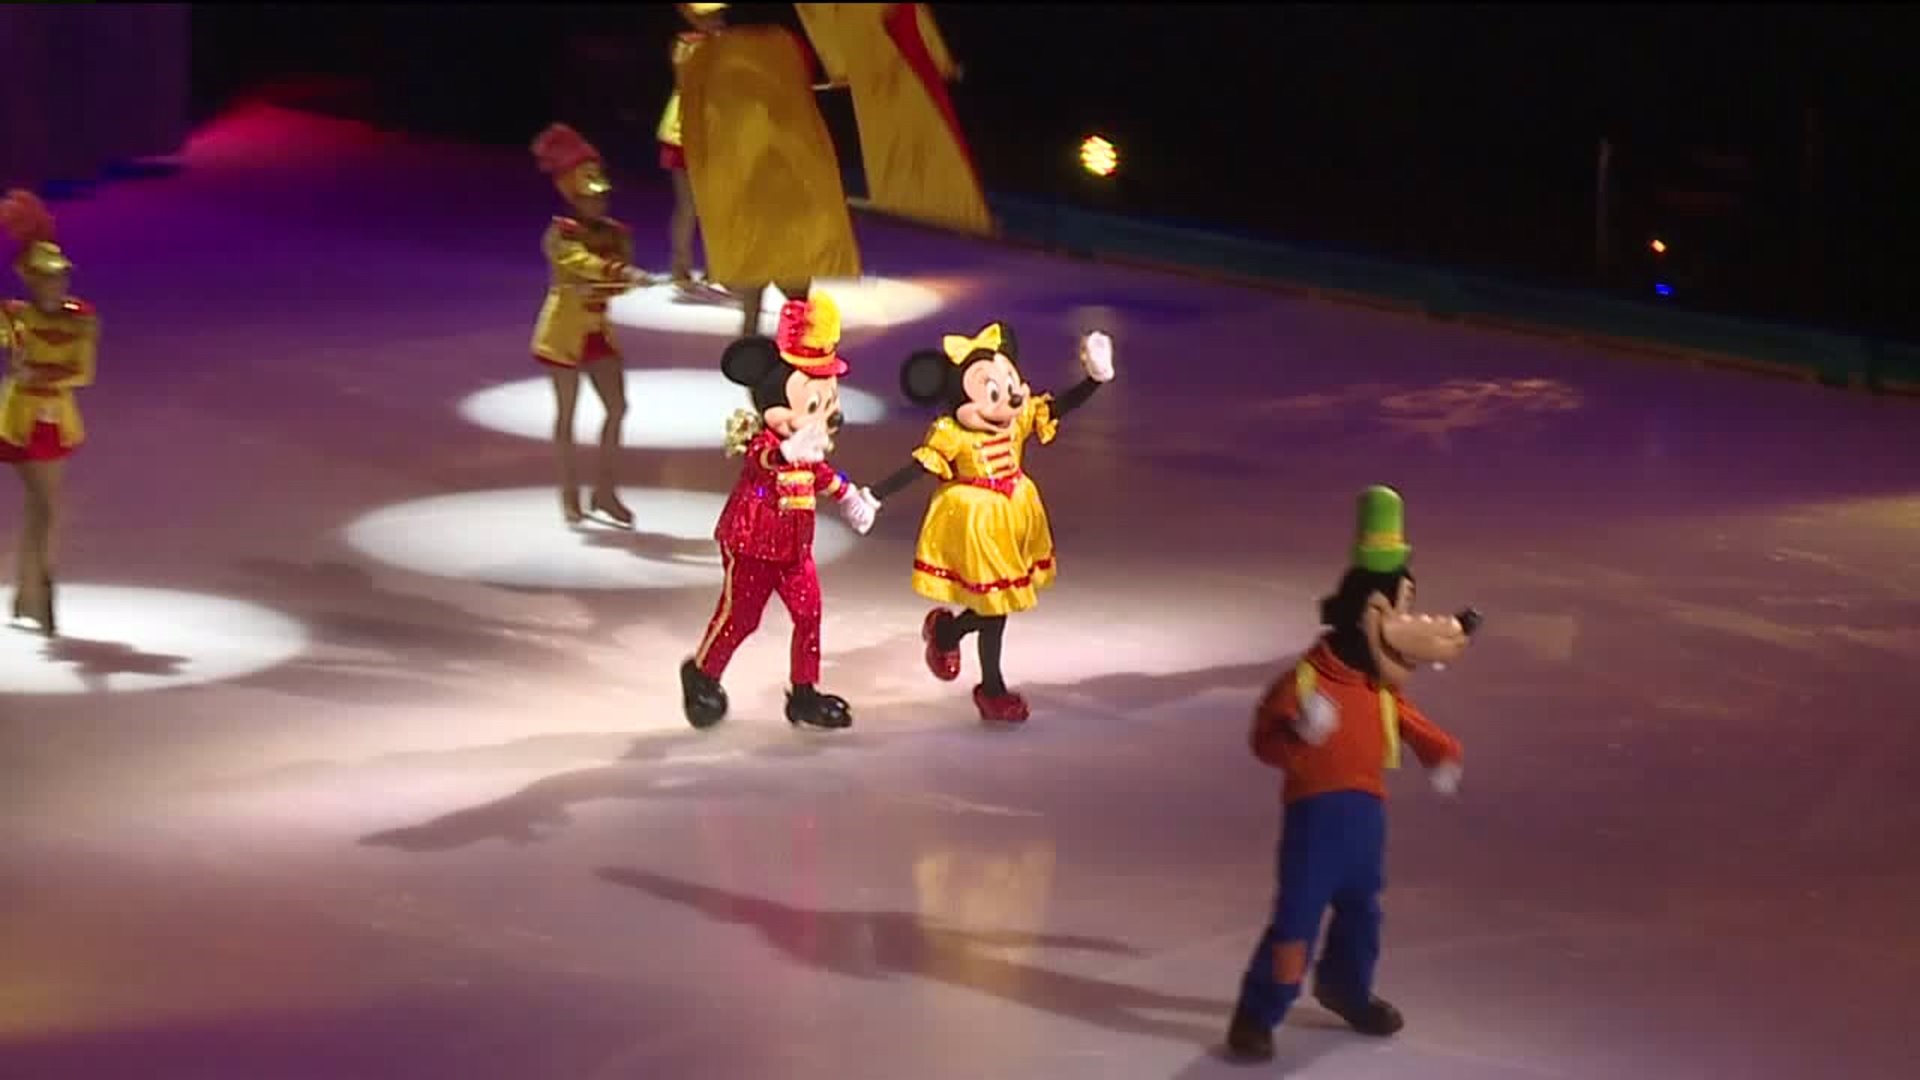 Disney on Ice Spectators Provided Extra Security at Mohegan Sun Arena